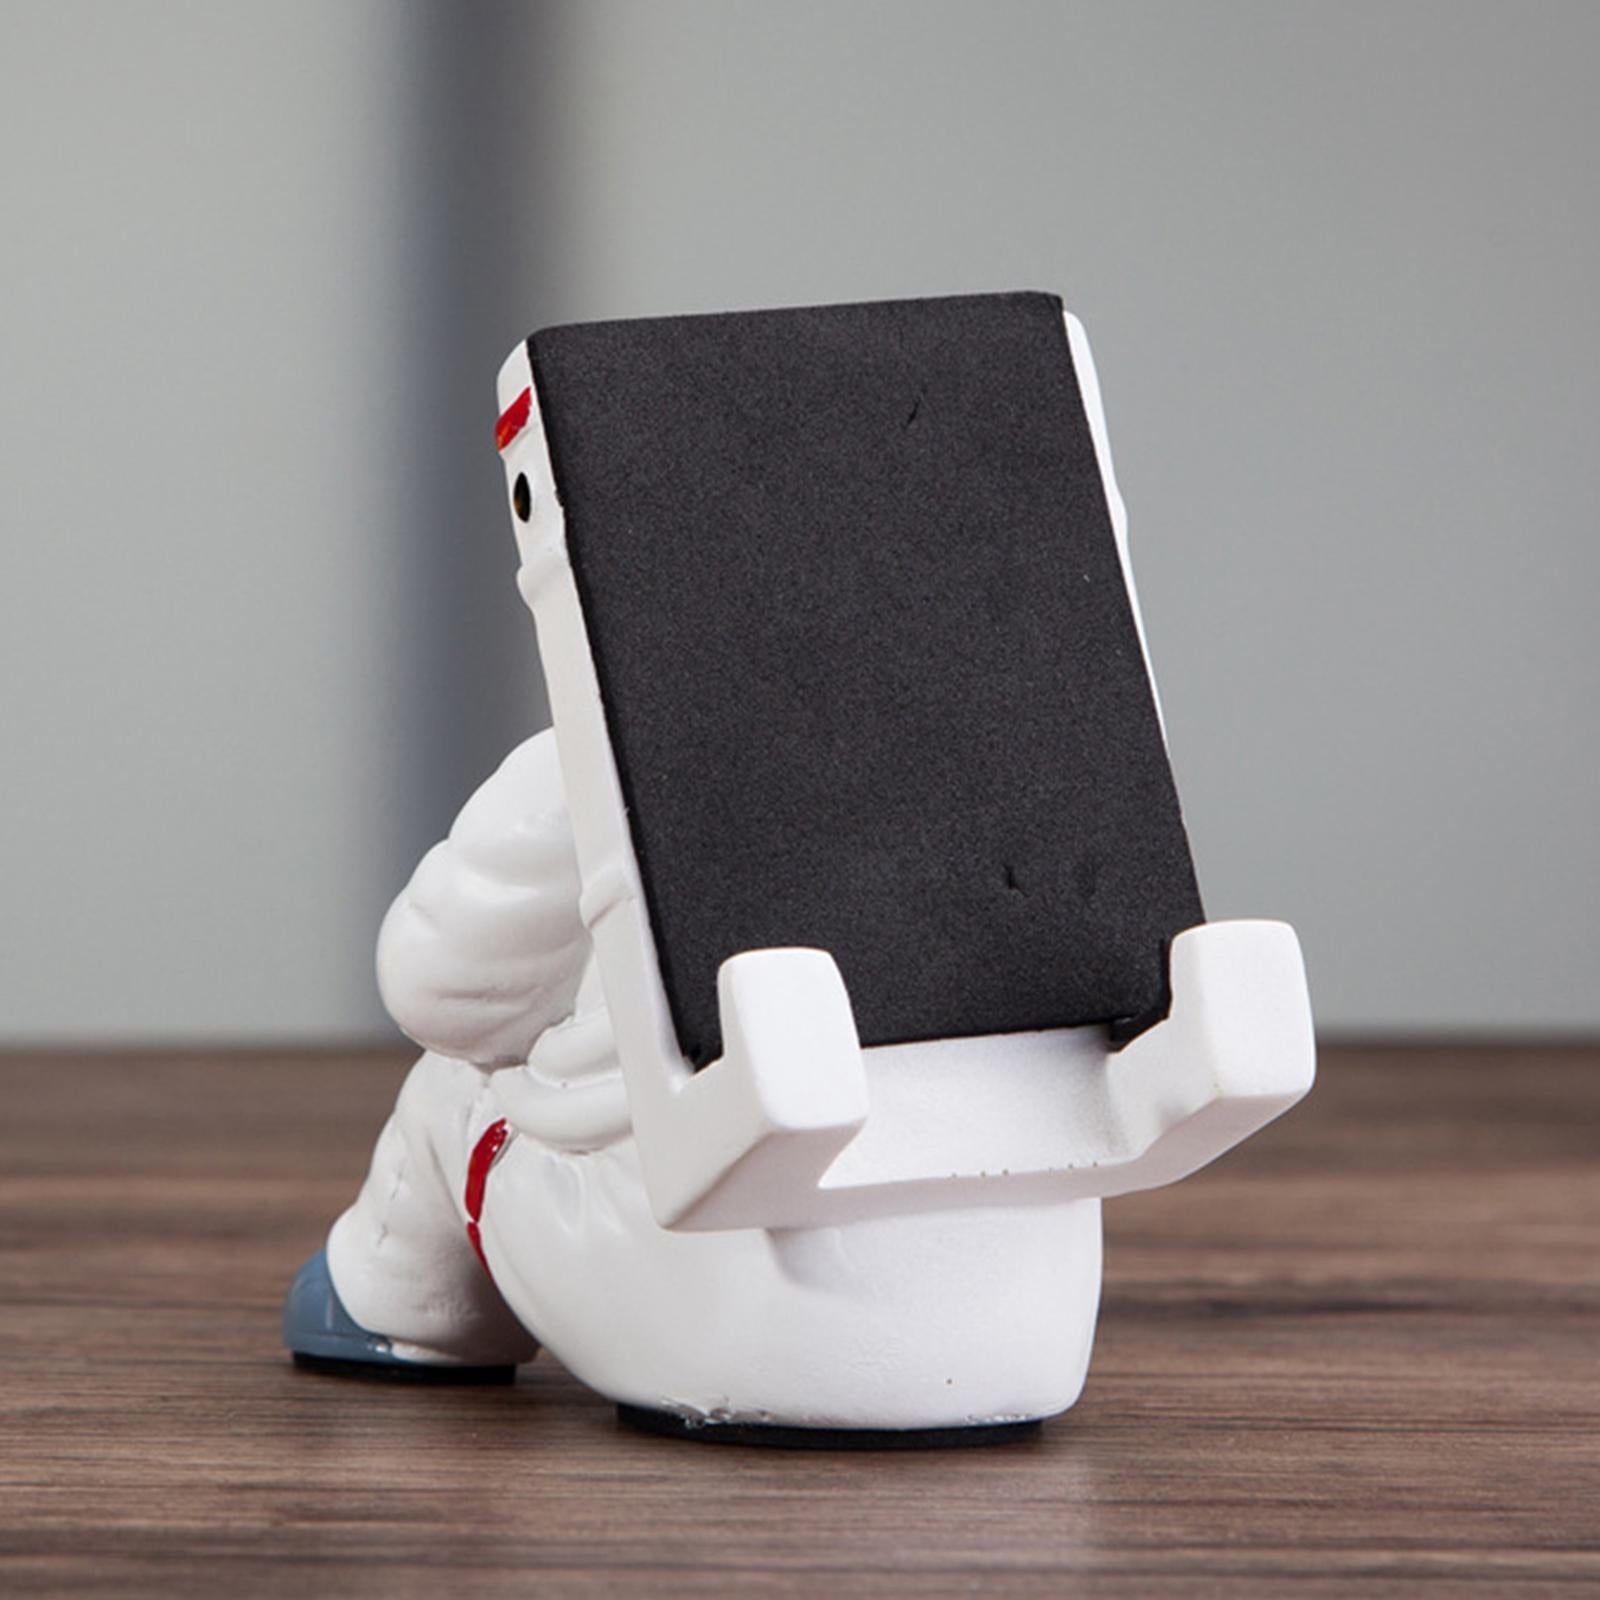 Astronaut Phone Holder Desktop Resin Cellphone Stand Dock Bracket Sitting